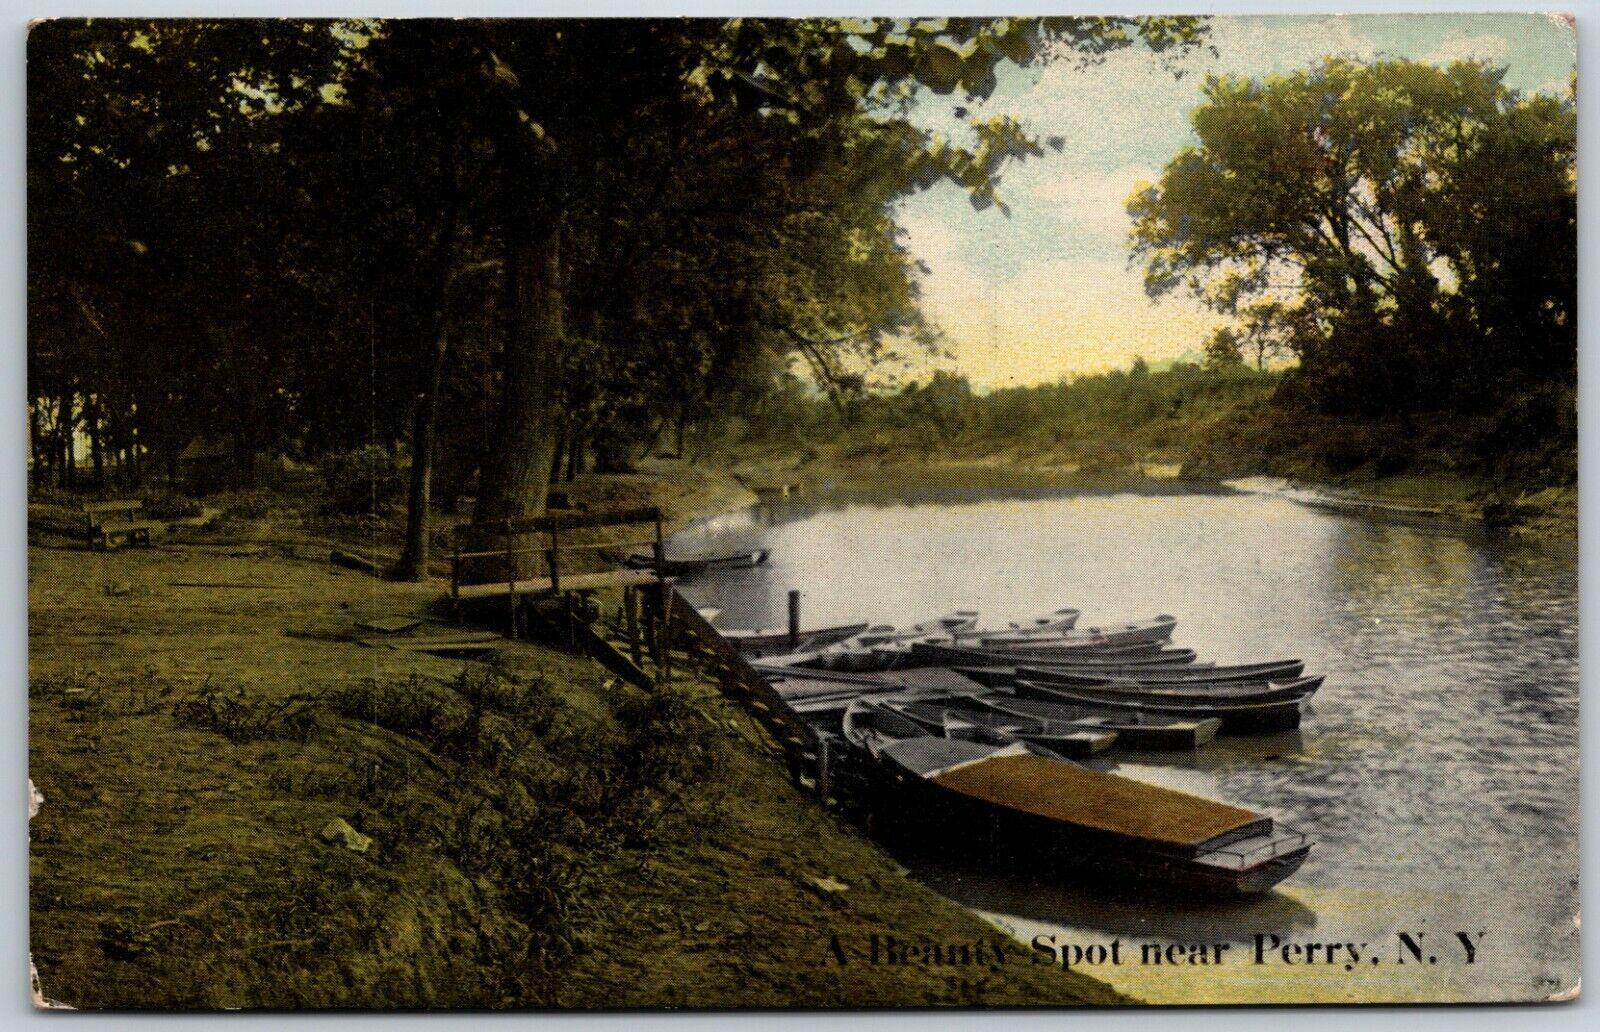 Beauty Spot near Perry, New York - Postcard